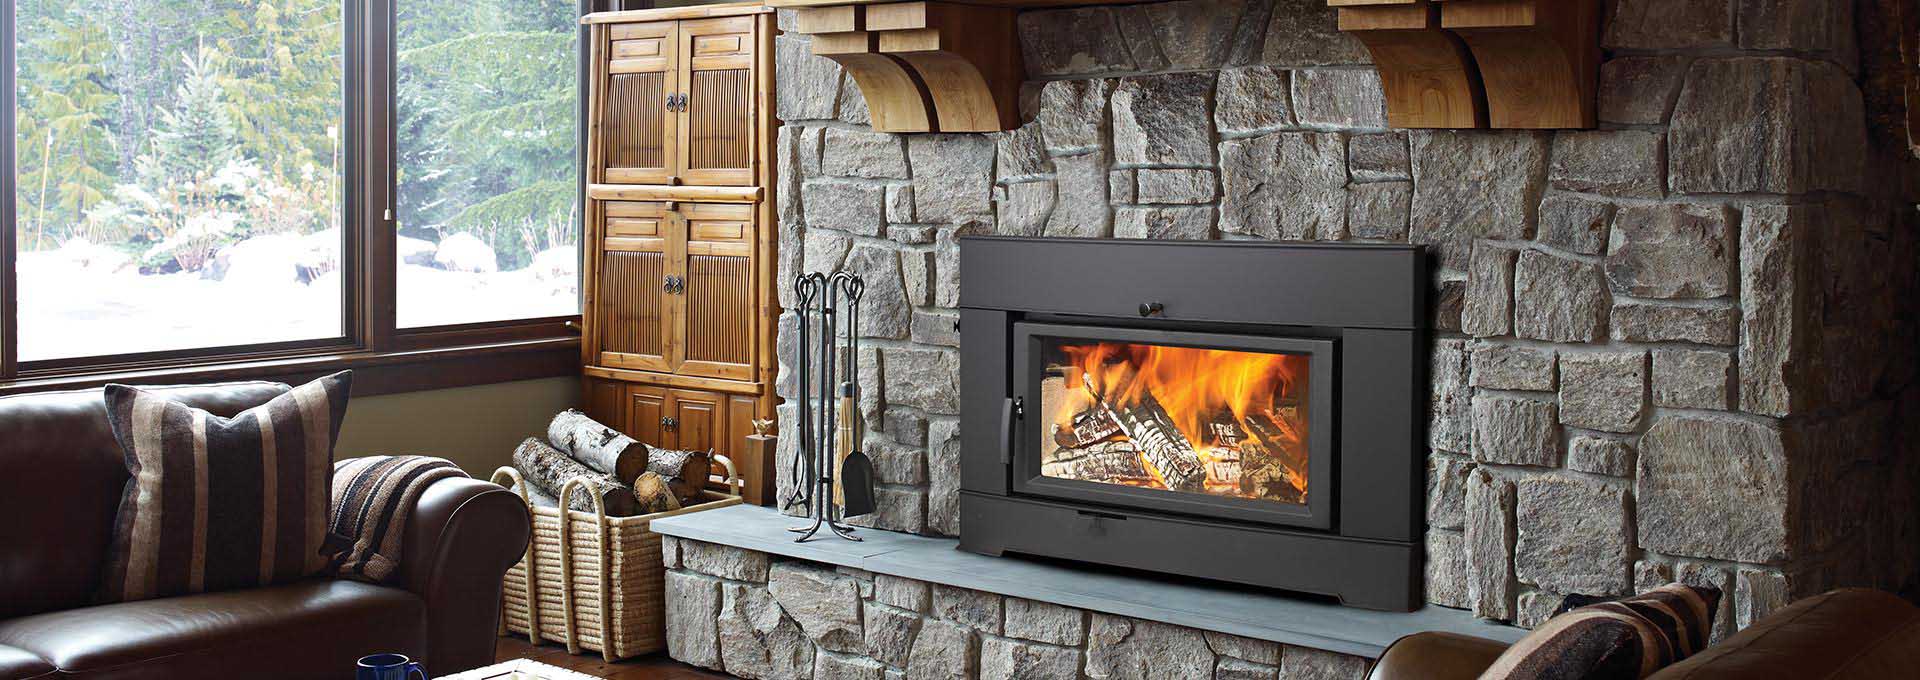 Regency Fireplace S Gas, Wood Burning Fireplace Manufacturers Canada